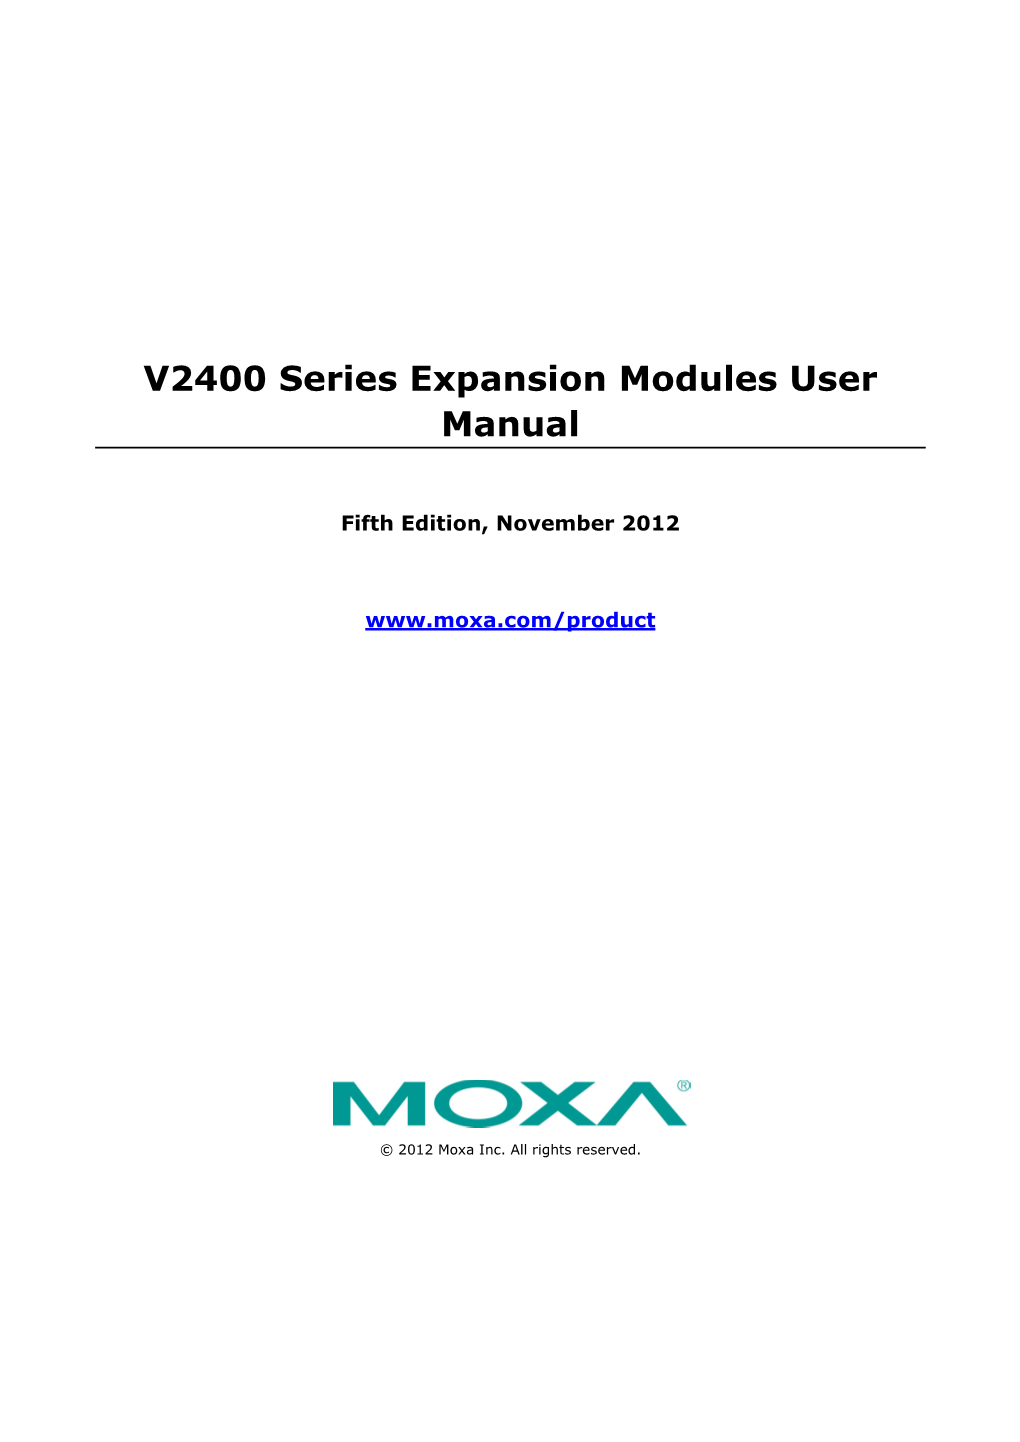 V2400 Expansion Modules User Manual